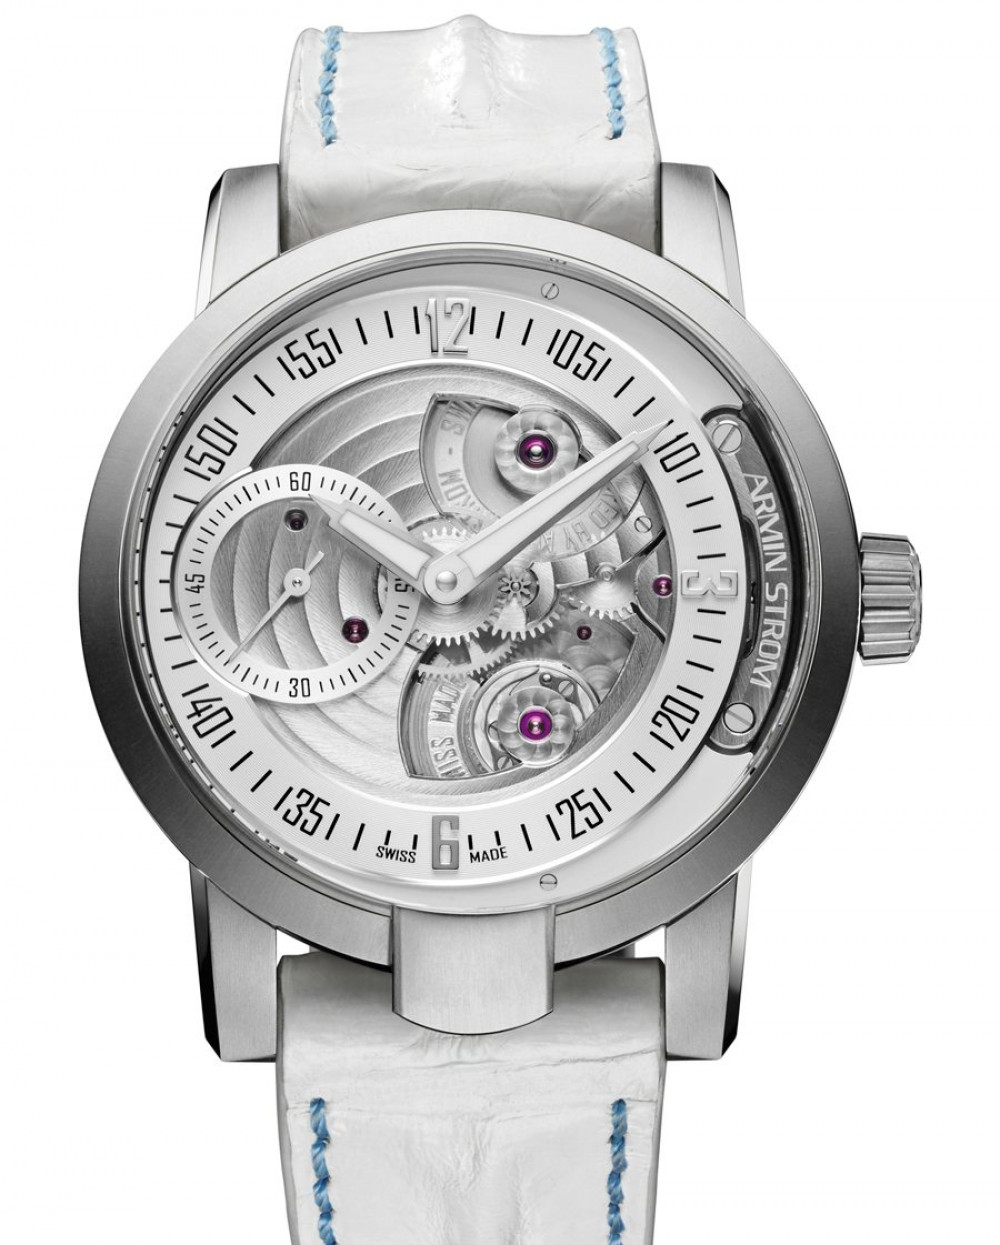 Zegarek firmy Armin Strom, model Gravity Air